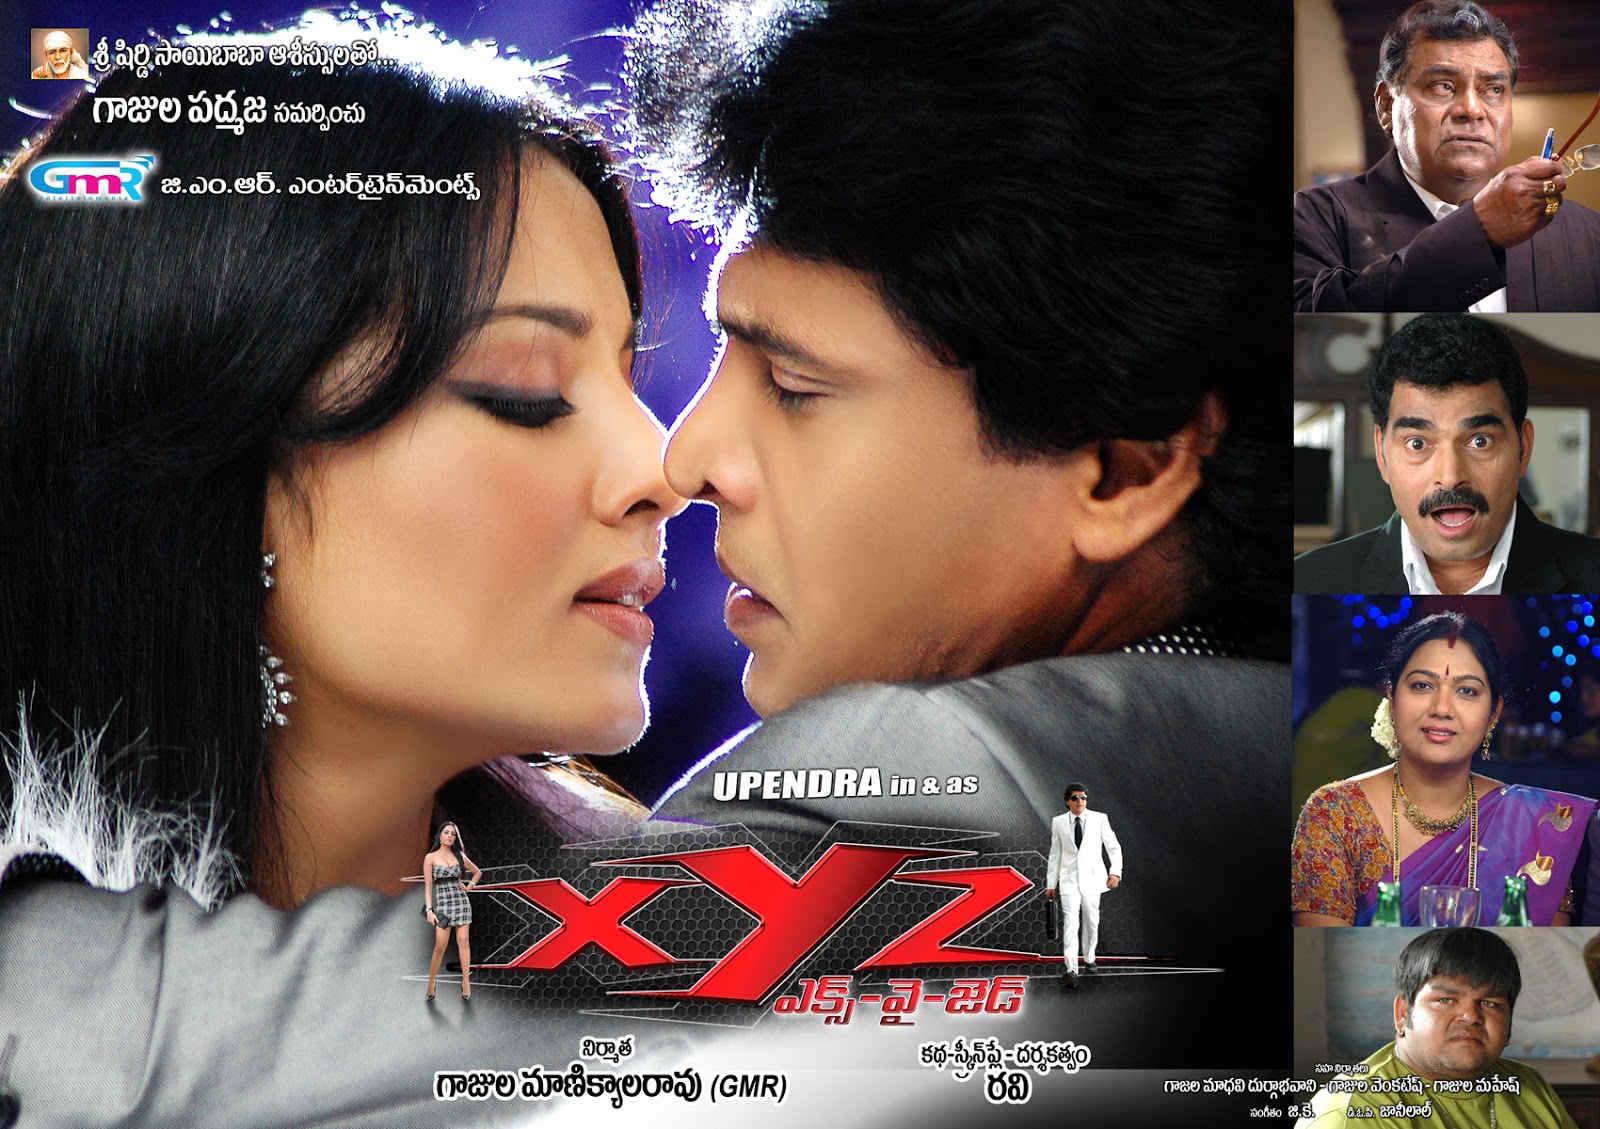 Upendra's XYZ Movie Wallpapers | Cinema65.com